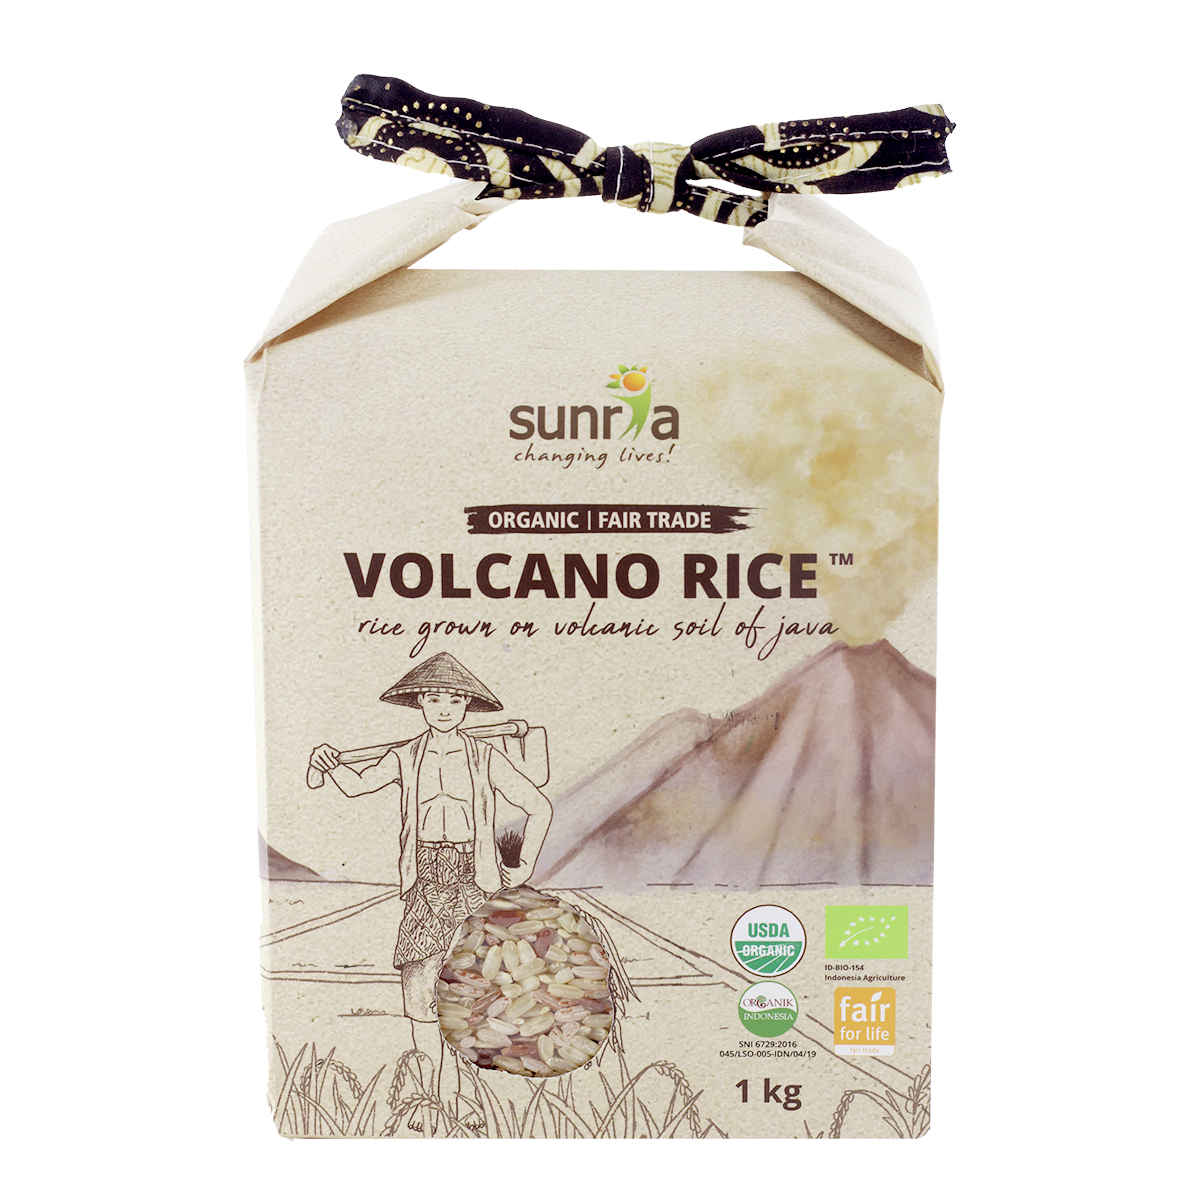 Sunria Volcano Rice 1kg